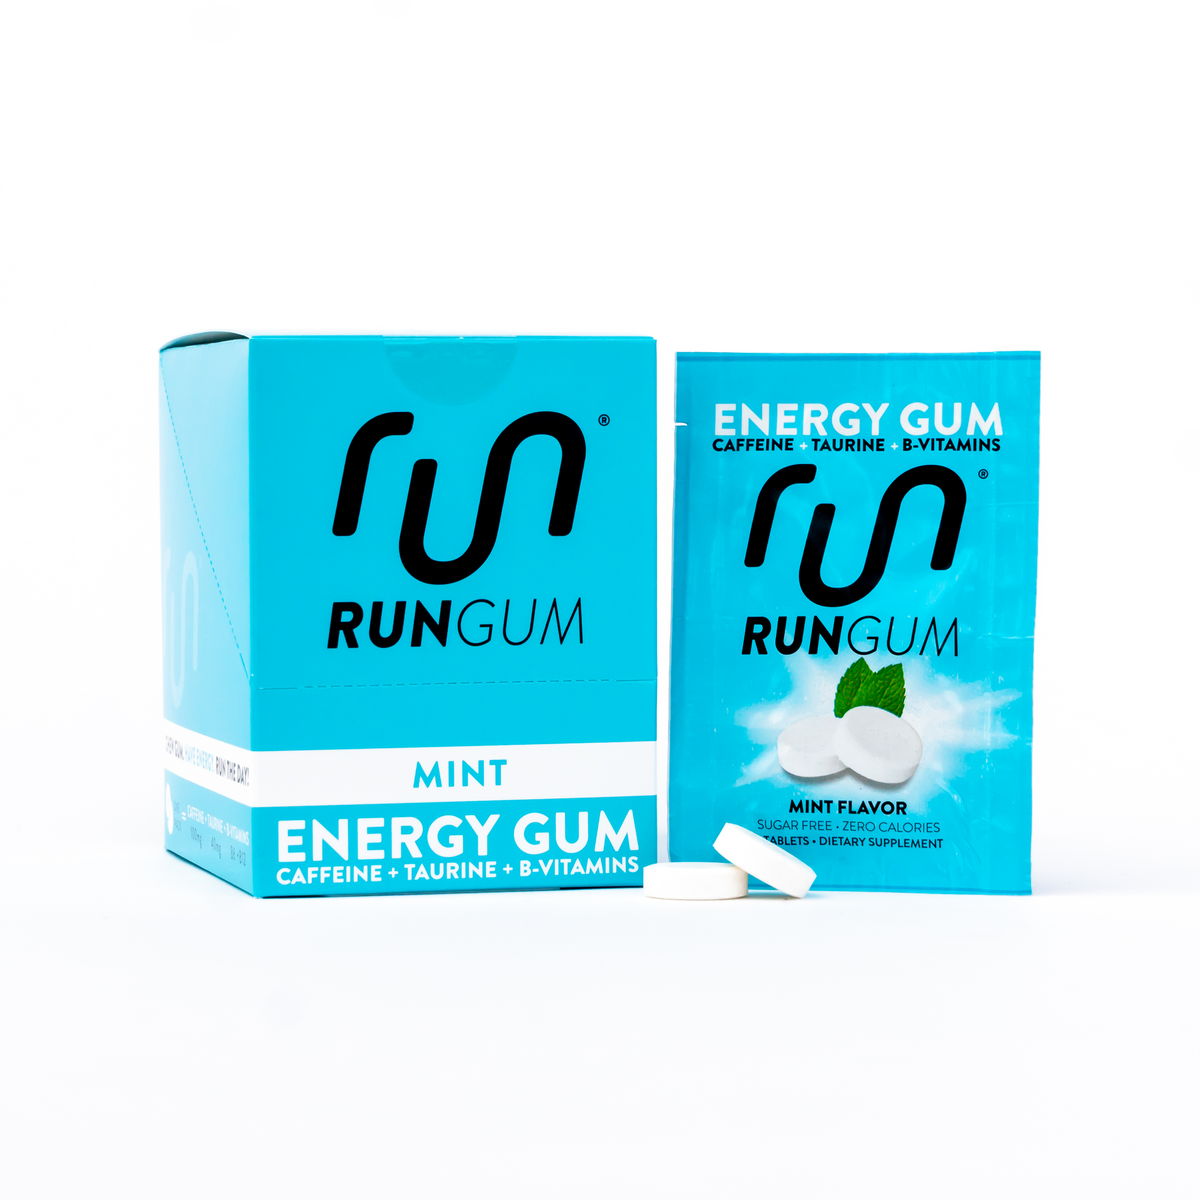 Energy Gum Original  Caffeine Chewing Gum by Run Gum for Athletes